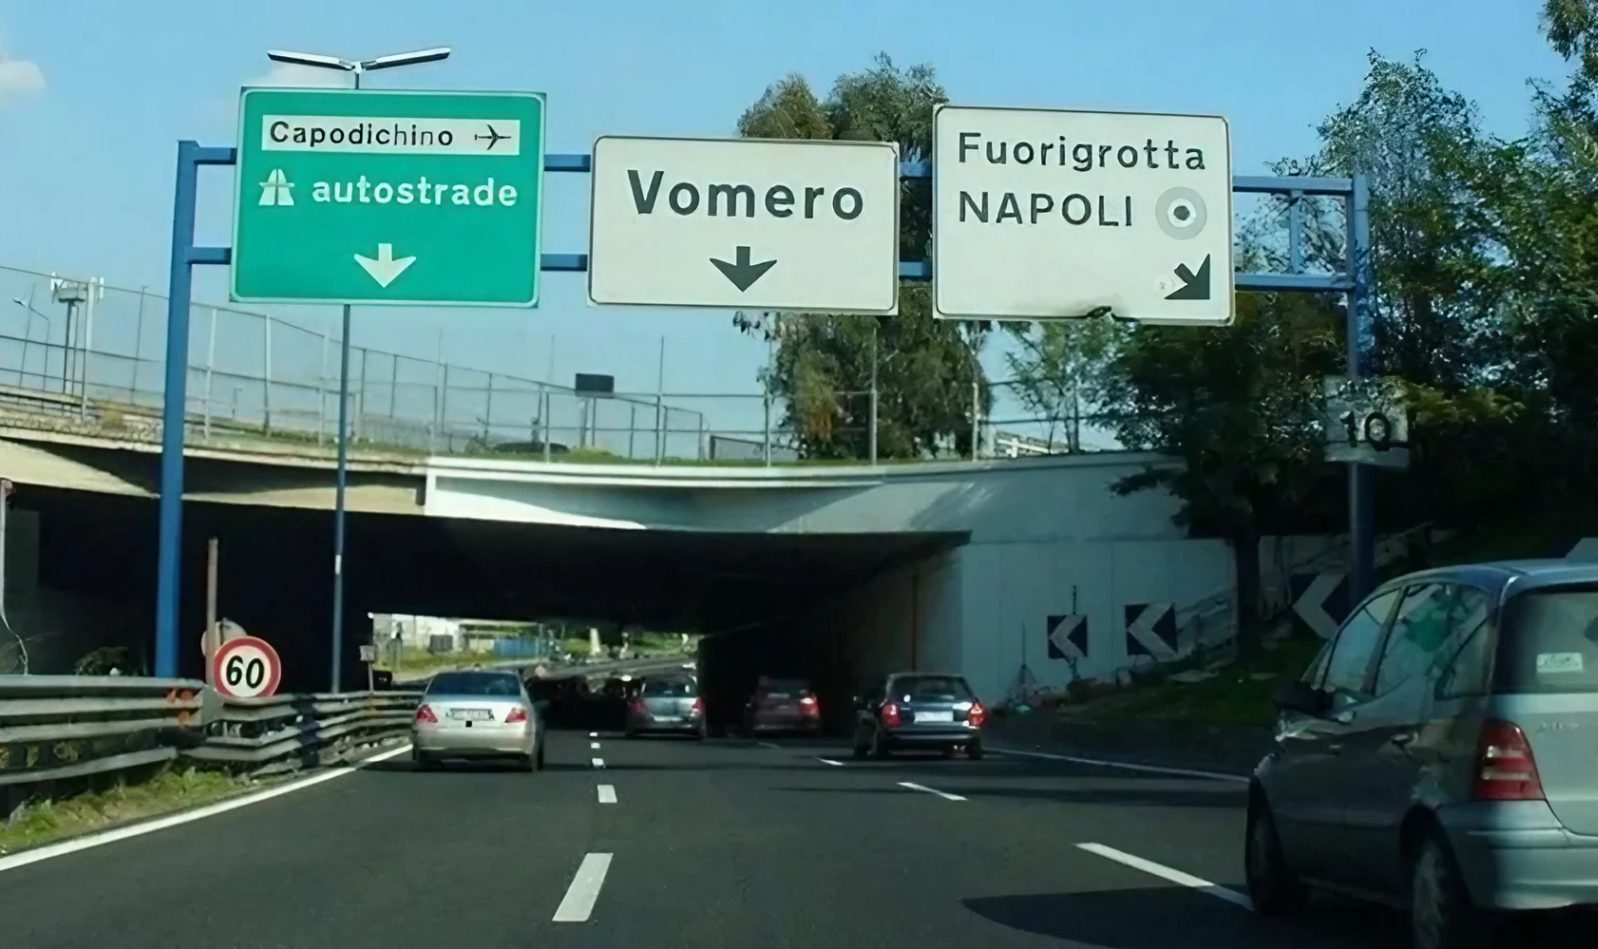 Circular de Nápoles, saída Vomero Fuorigrotta